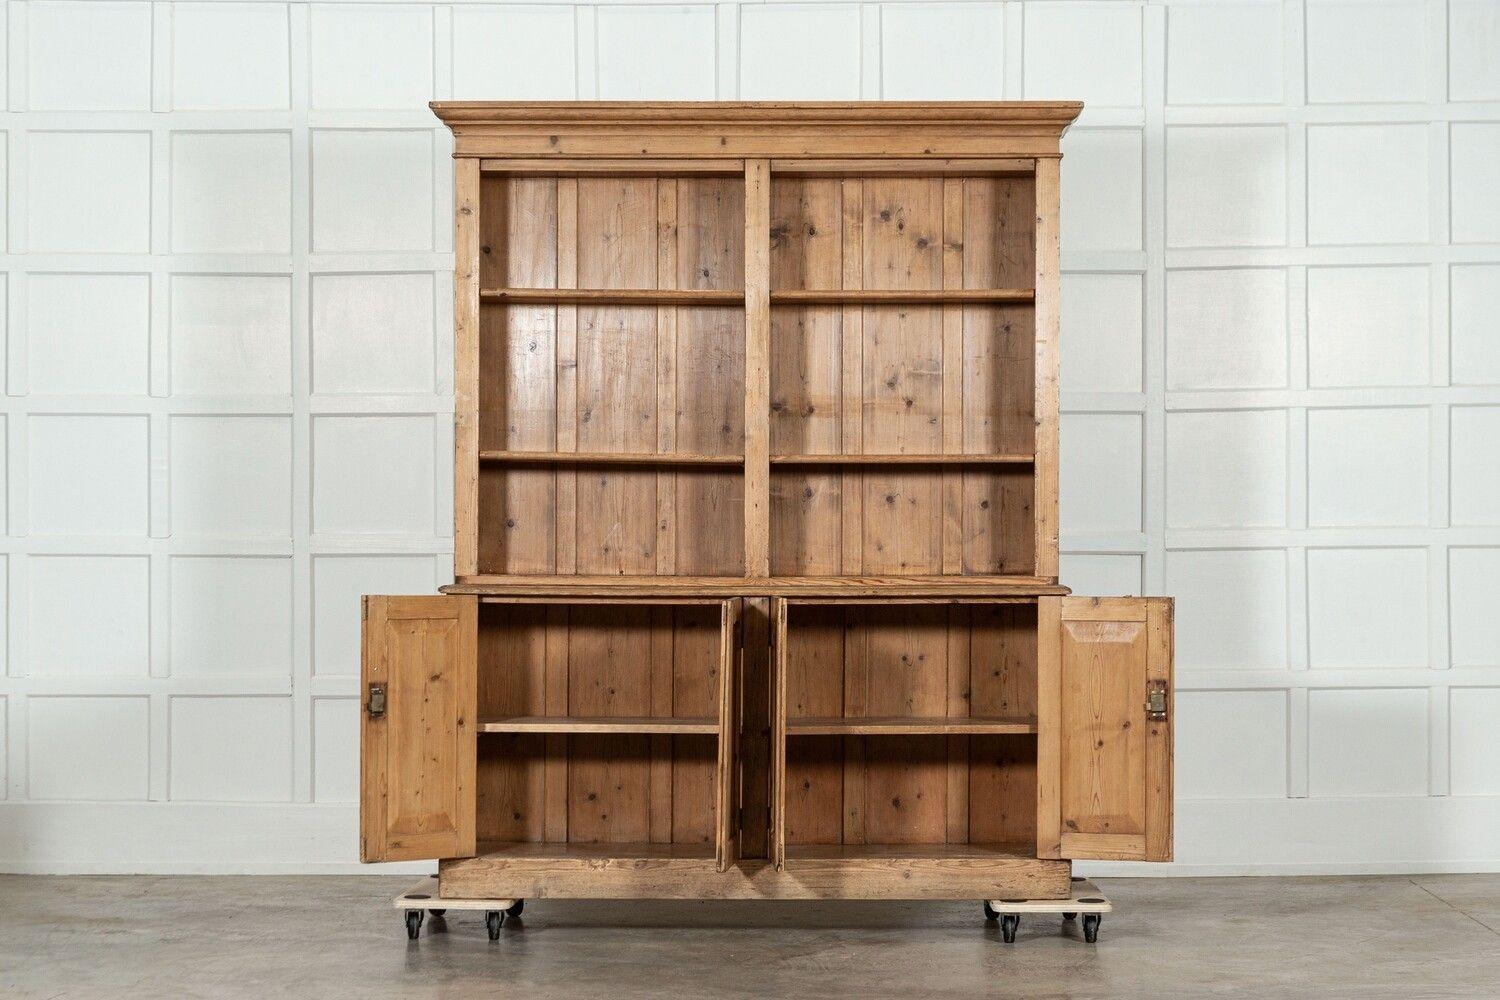 circa 1880
Large 19thC English Pine Bookcase / Dresser
sku 1697
Base W154 x D48 x H91 cm
Top W157 x D31 x H105 cm
Together W157 x D48 x H196 cm